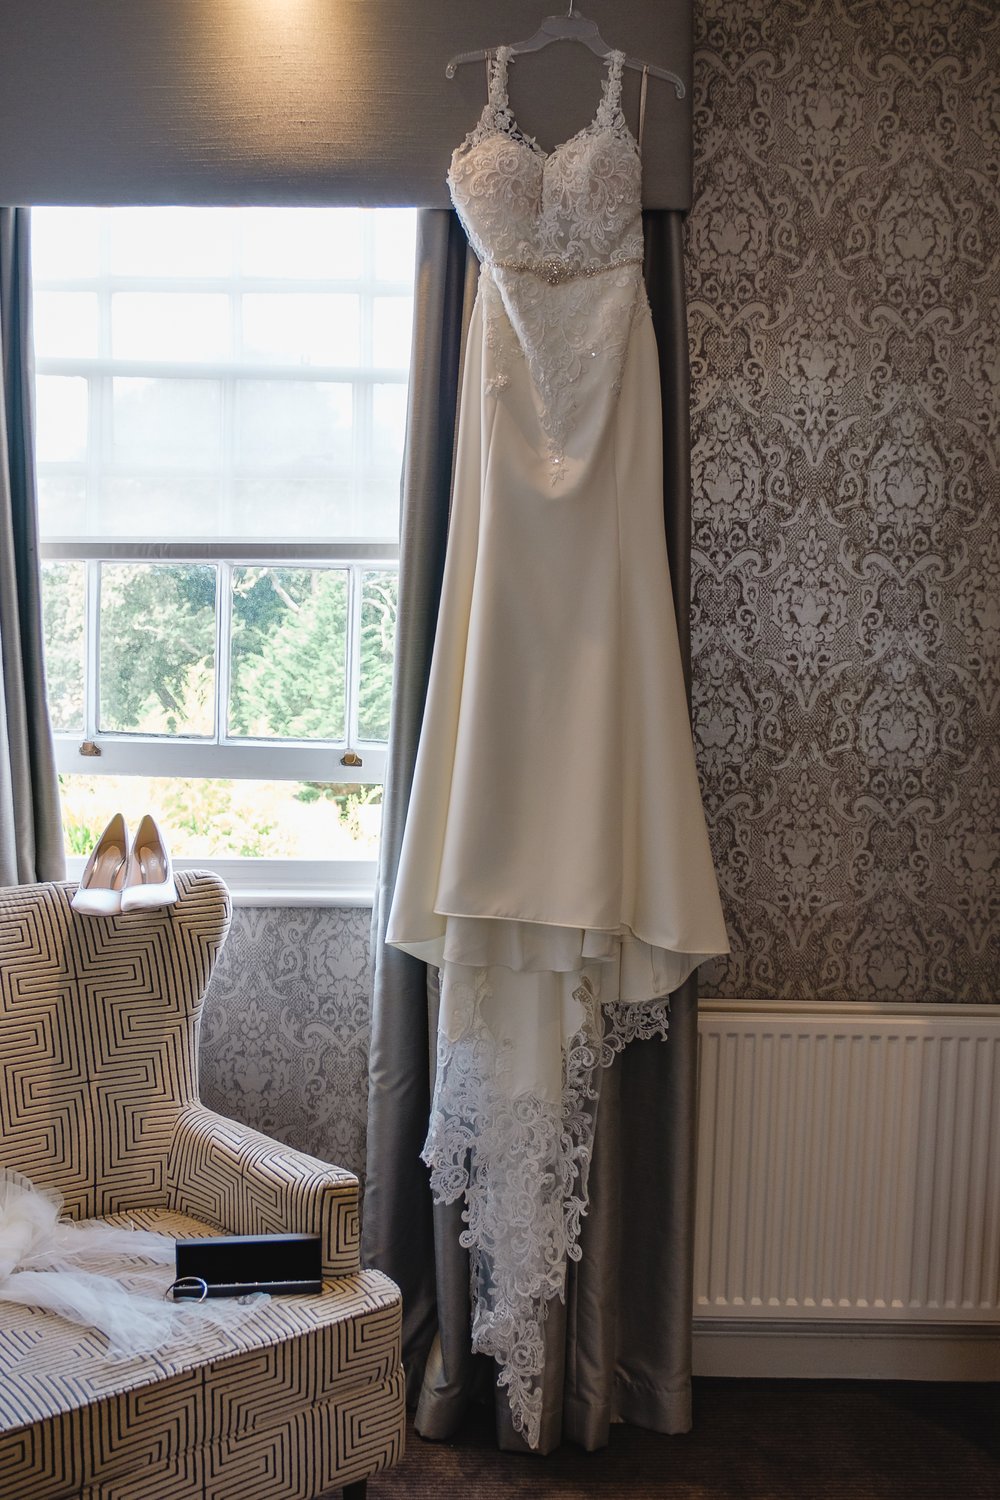 Bride's dress hanging up